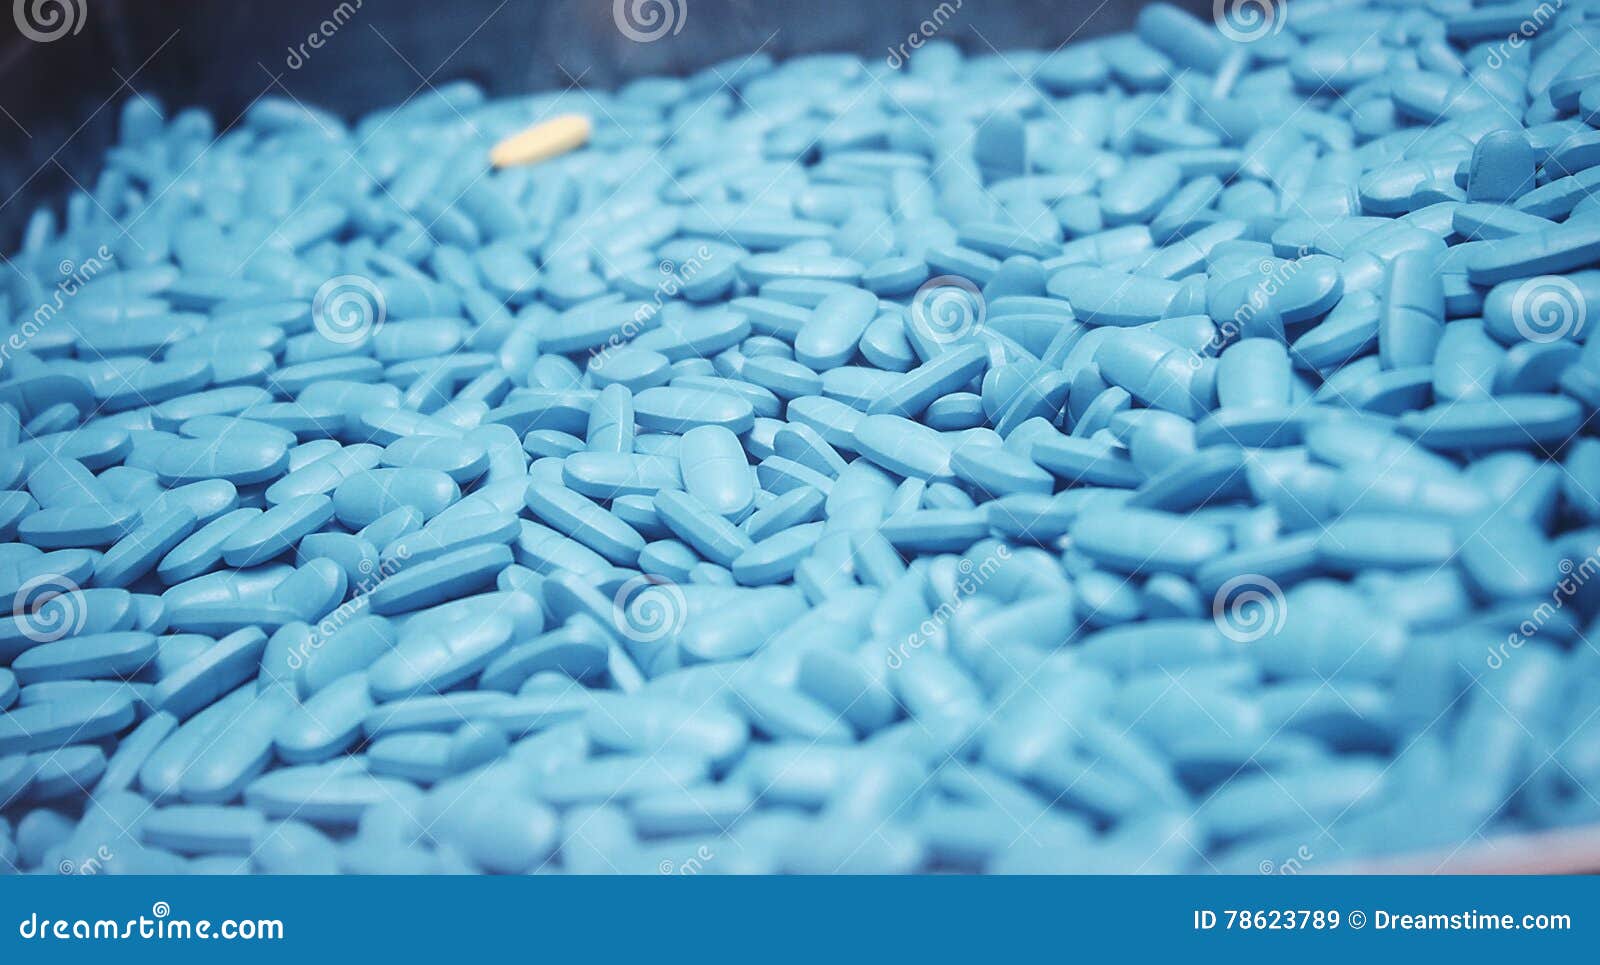 many blue pills